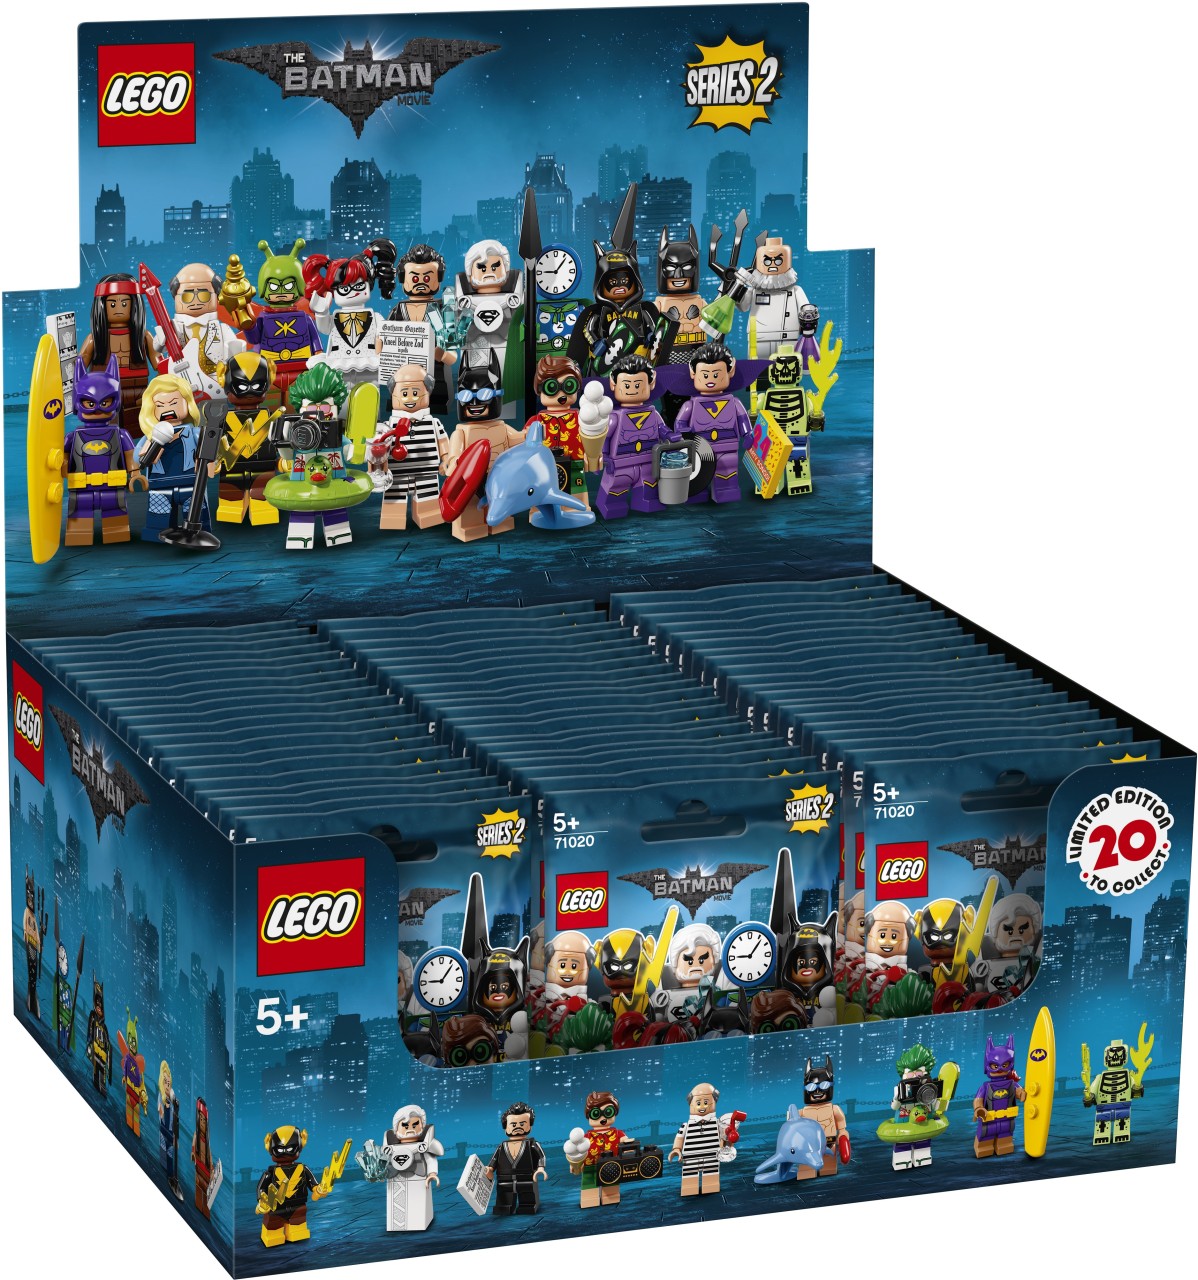 Lego Minifigures batman series. Needing numbers 2, 5, 6, 7, 8, 9, 10, 11,  15, 19 and 20.